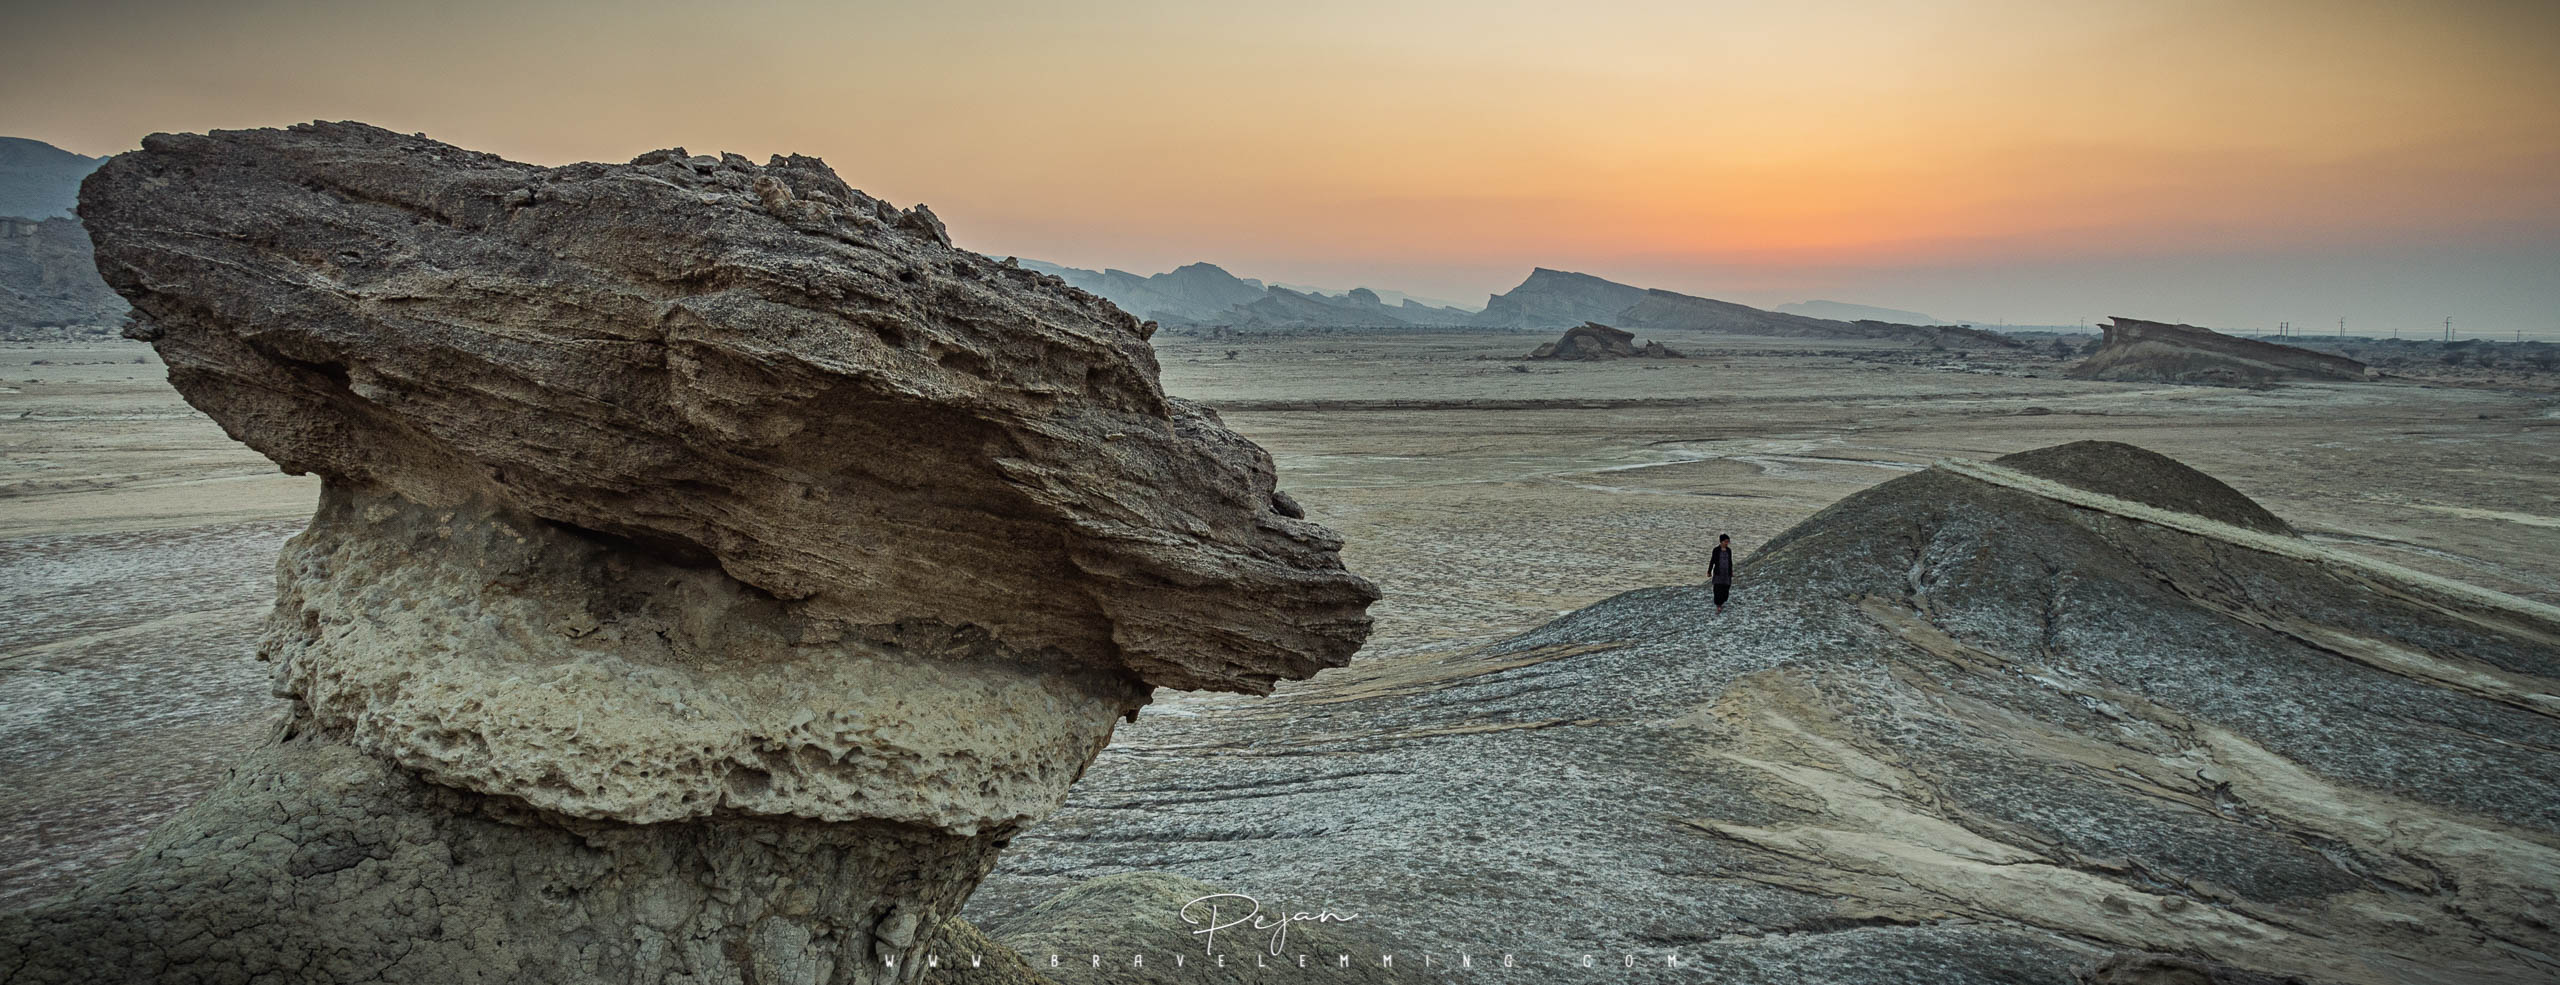 Impressionnante géologie de l'île de Qeshm, Iran